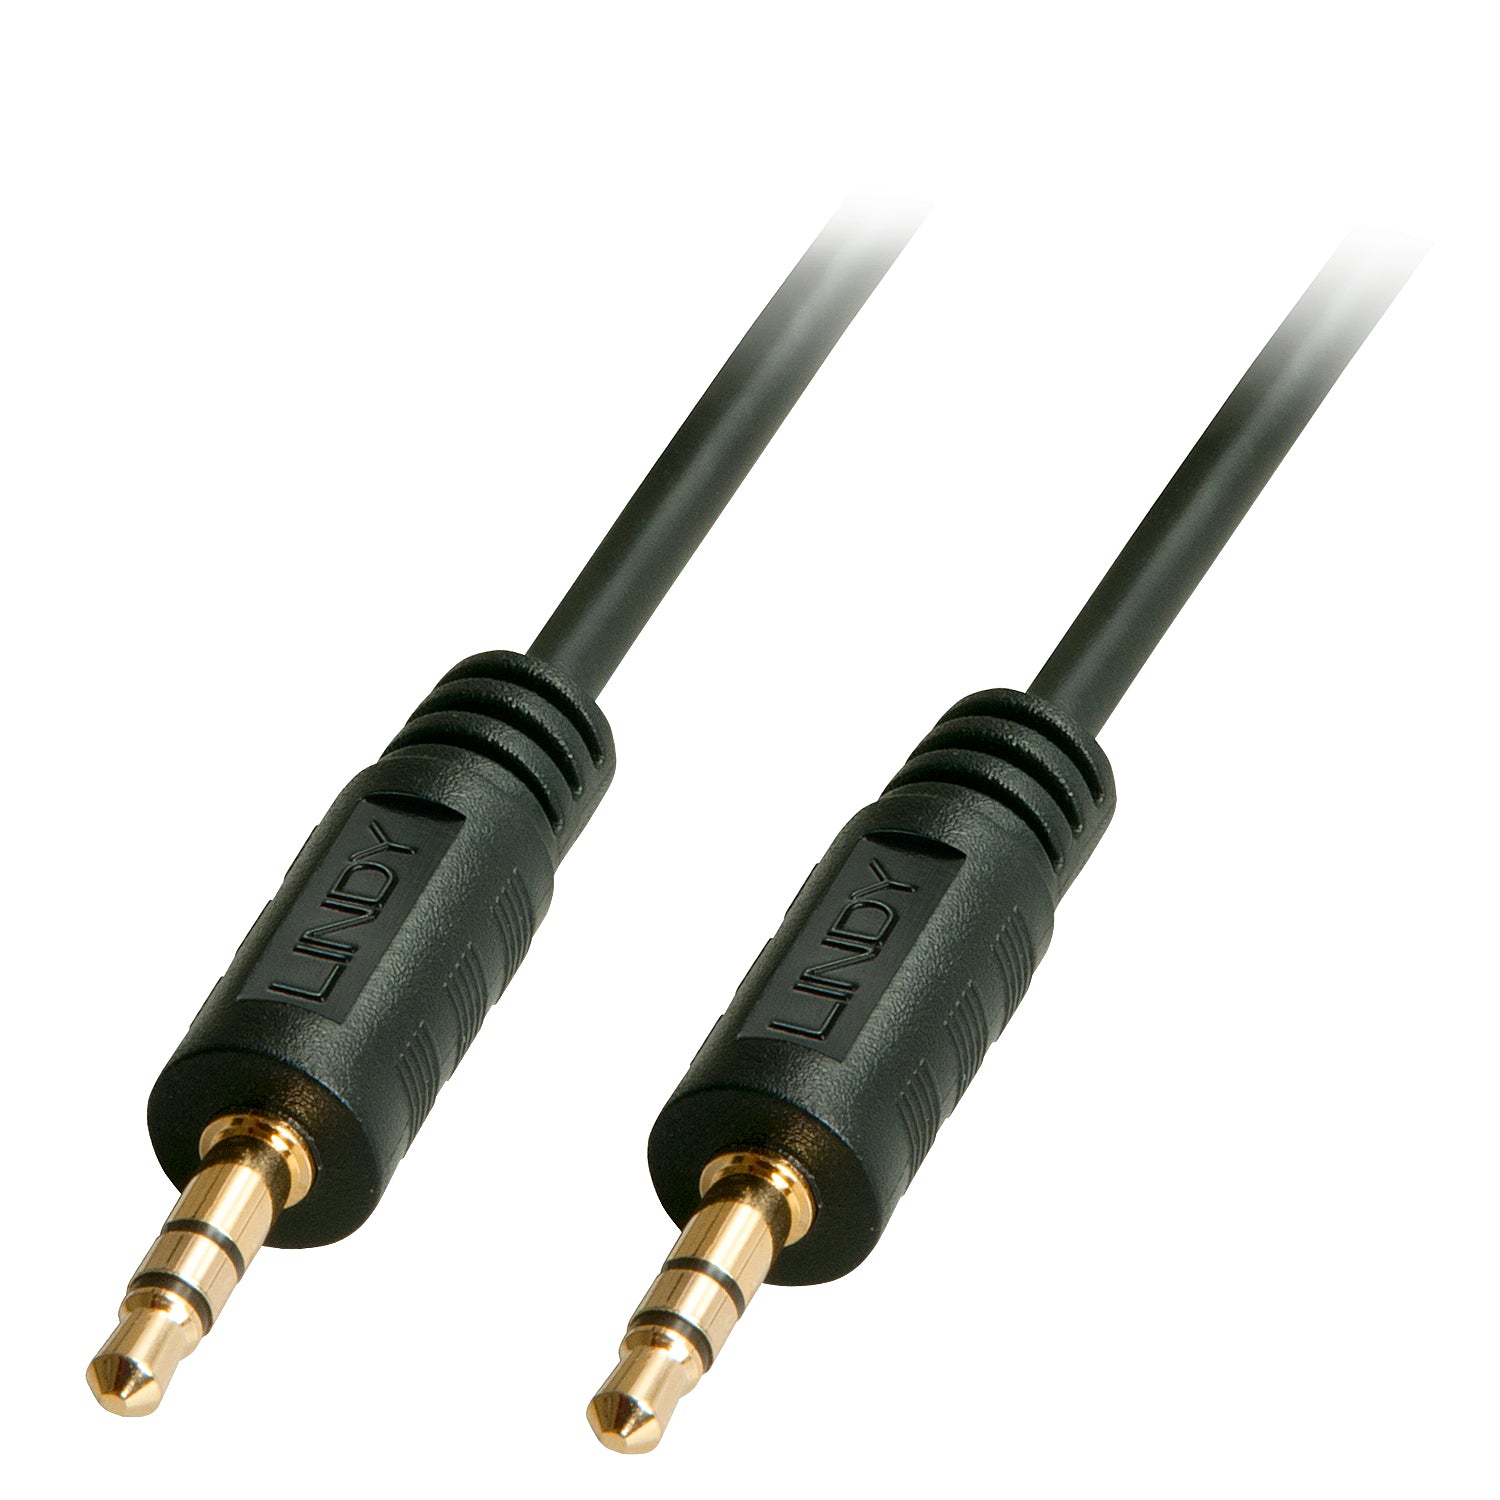 Lindy 1m Premium Audio 3.5mm Jack Cable